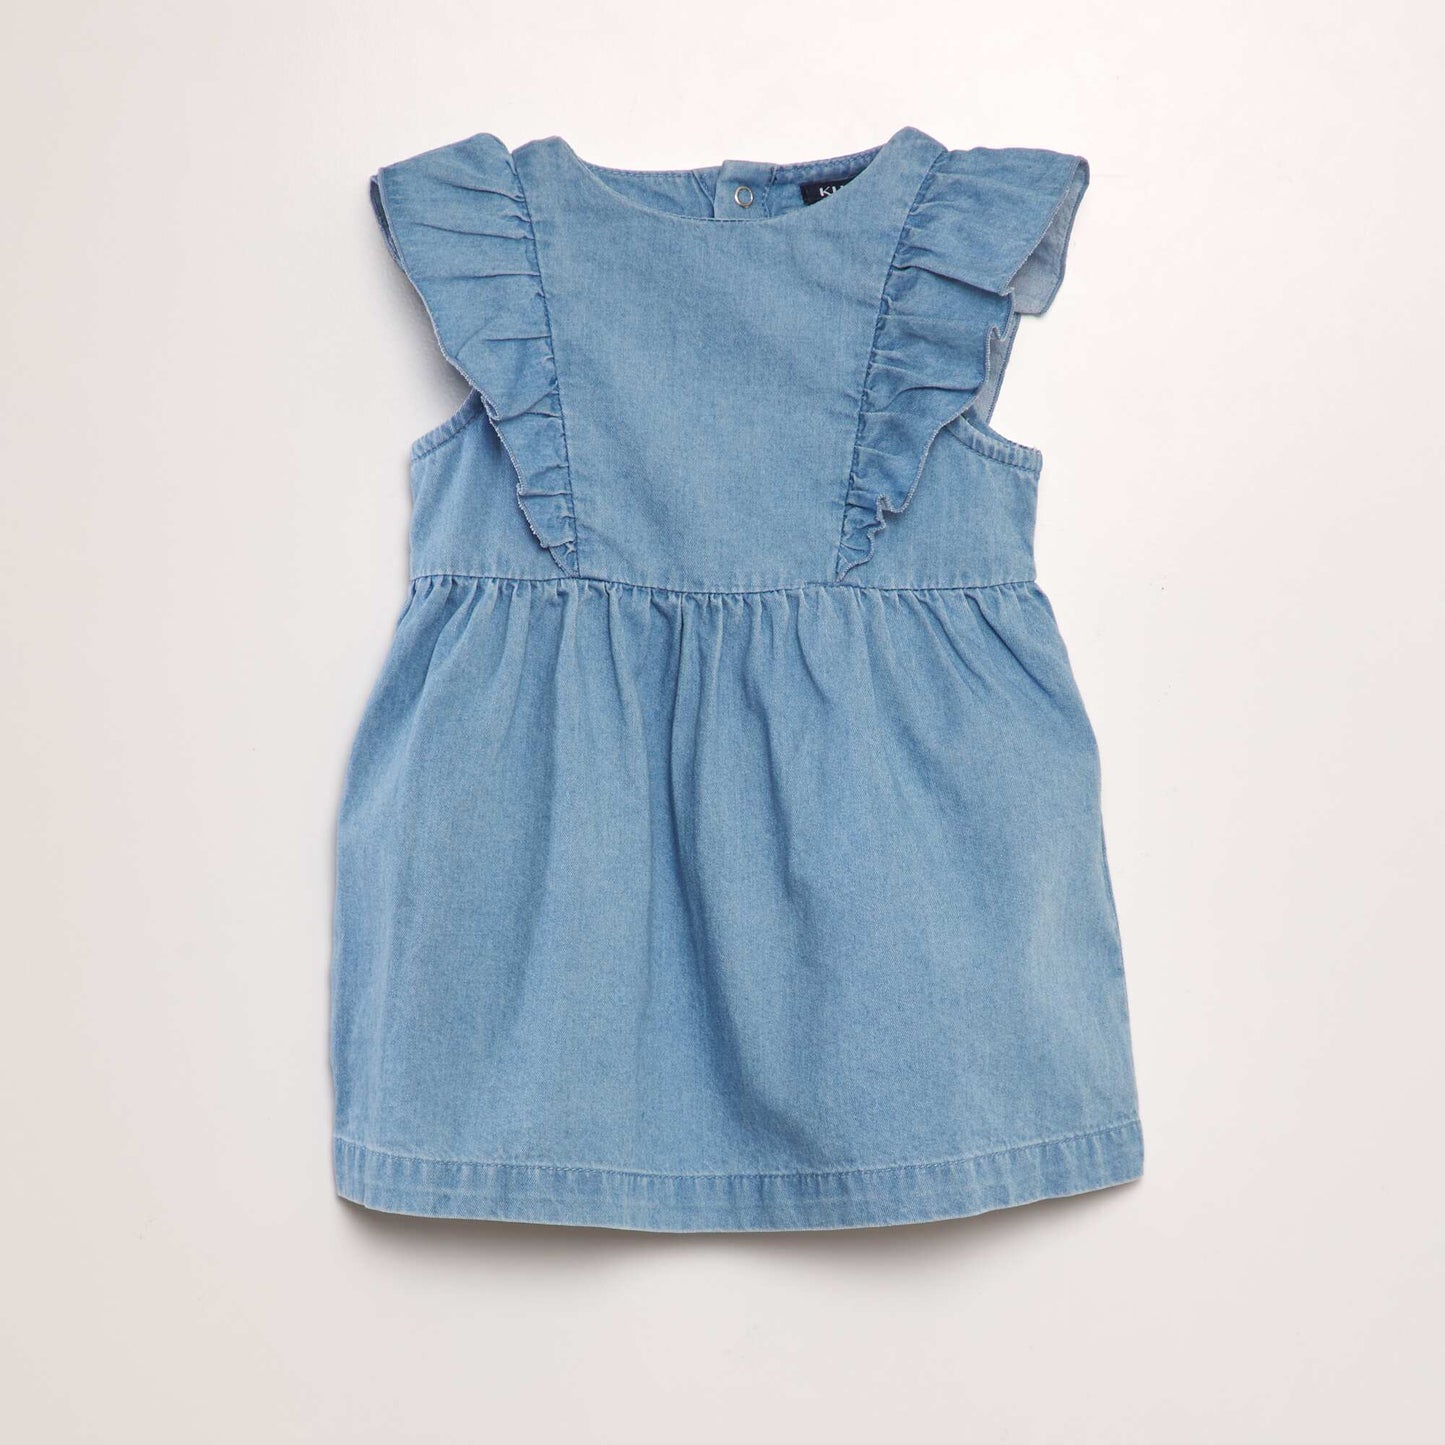 Denim dress with bloomers - 2-piece set BLUE